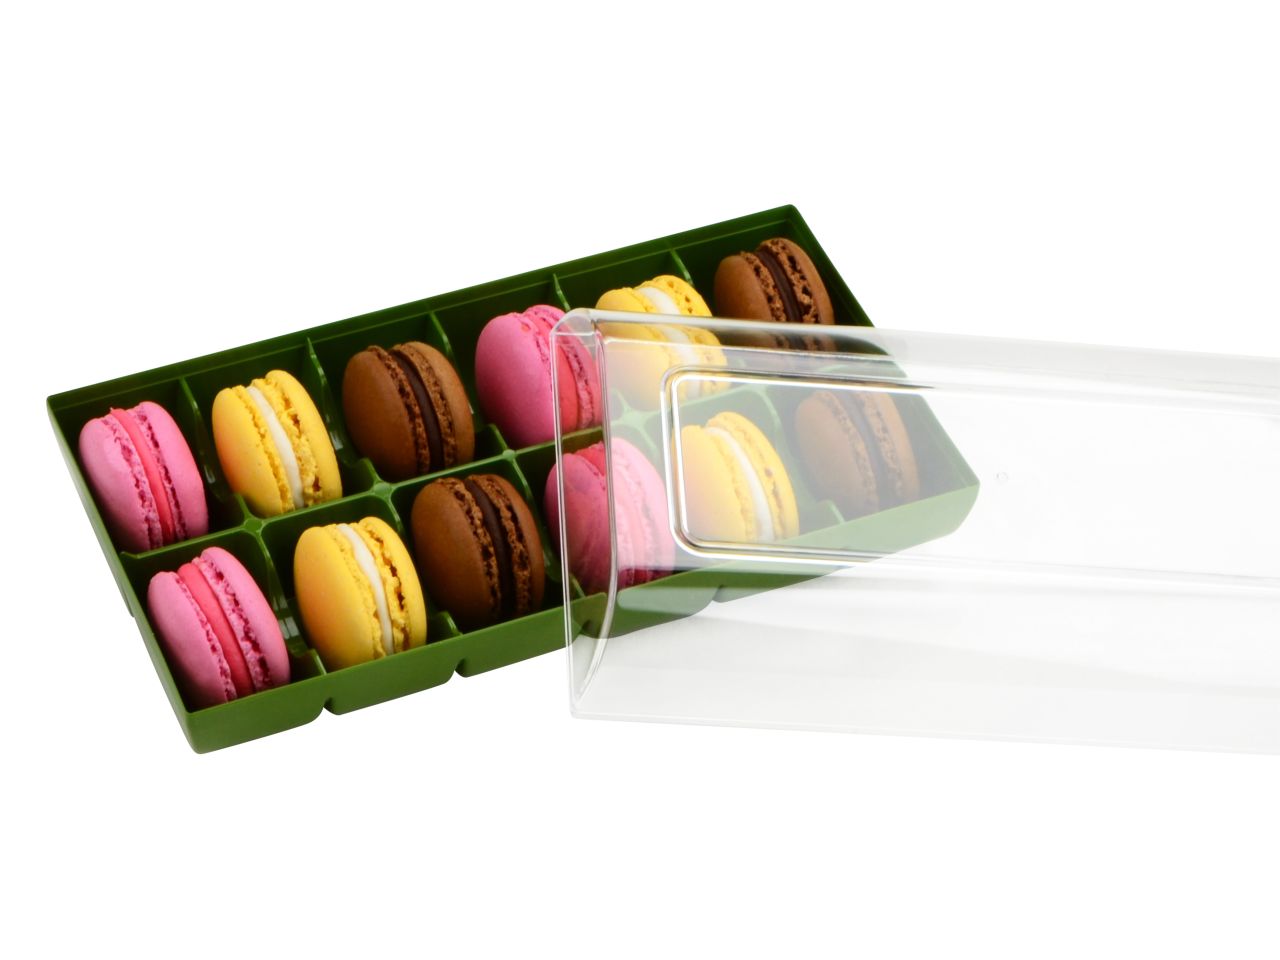 Macarons-Verpackung: Grün, Kunststoff, Olive & transparent, für 12 Macarons, 18,4 x 9,4 x 5,3 cm